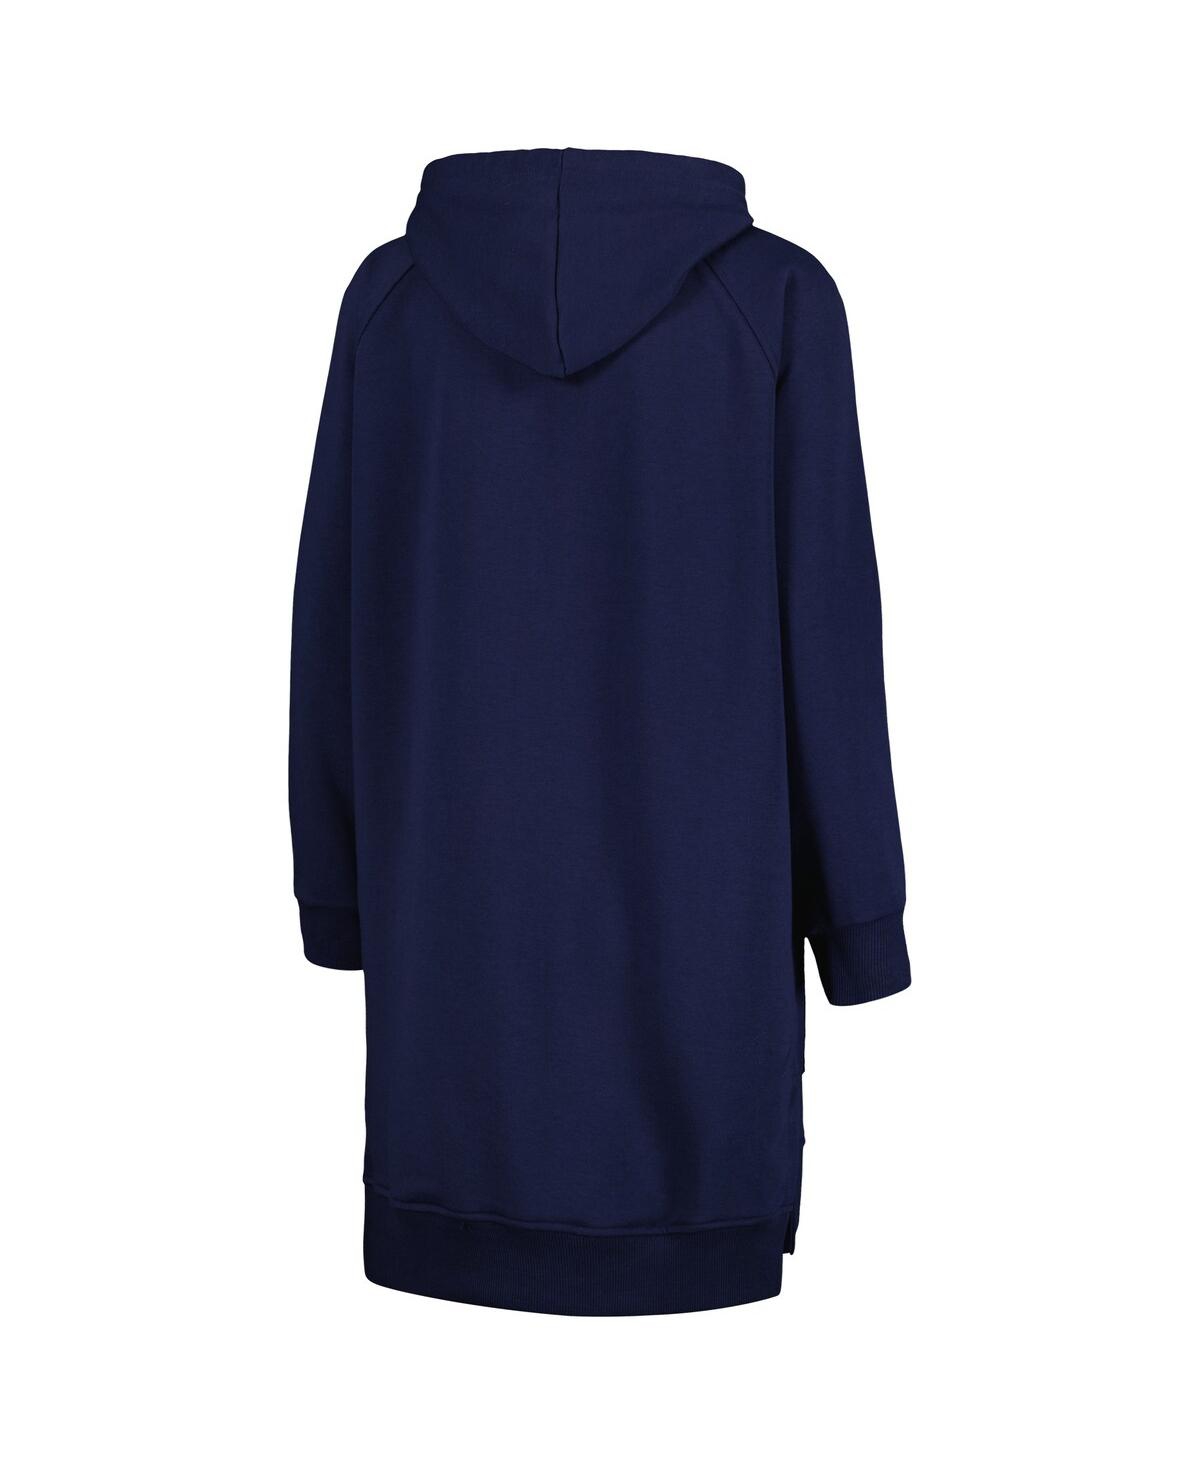 Shop Gameday Couture Women's  Navy Penn State Nittany Lions Take A Knee Raglan Hooded Sweatshirt Dress